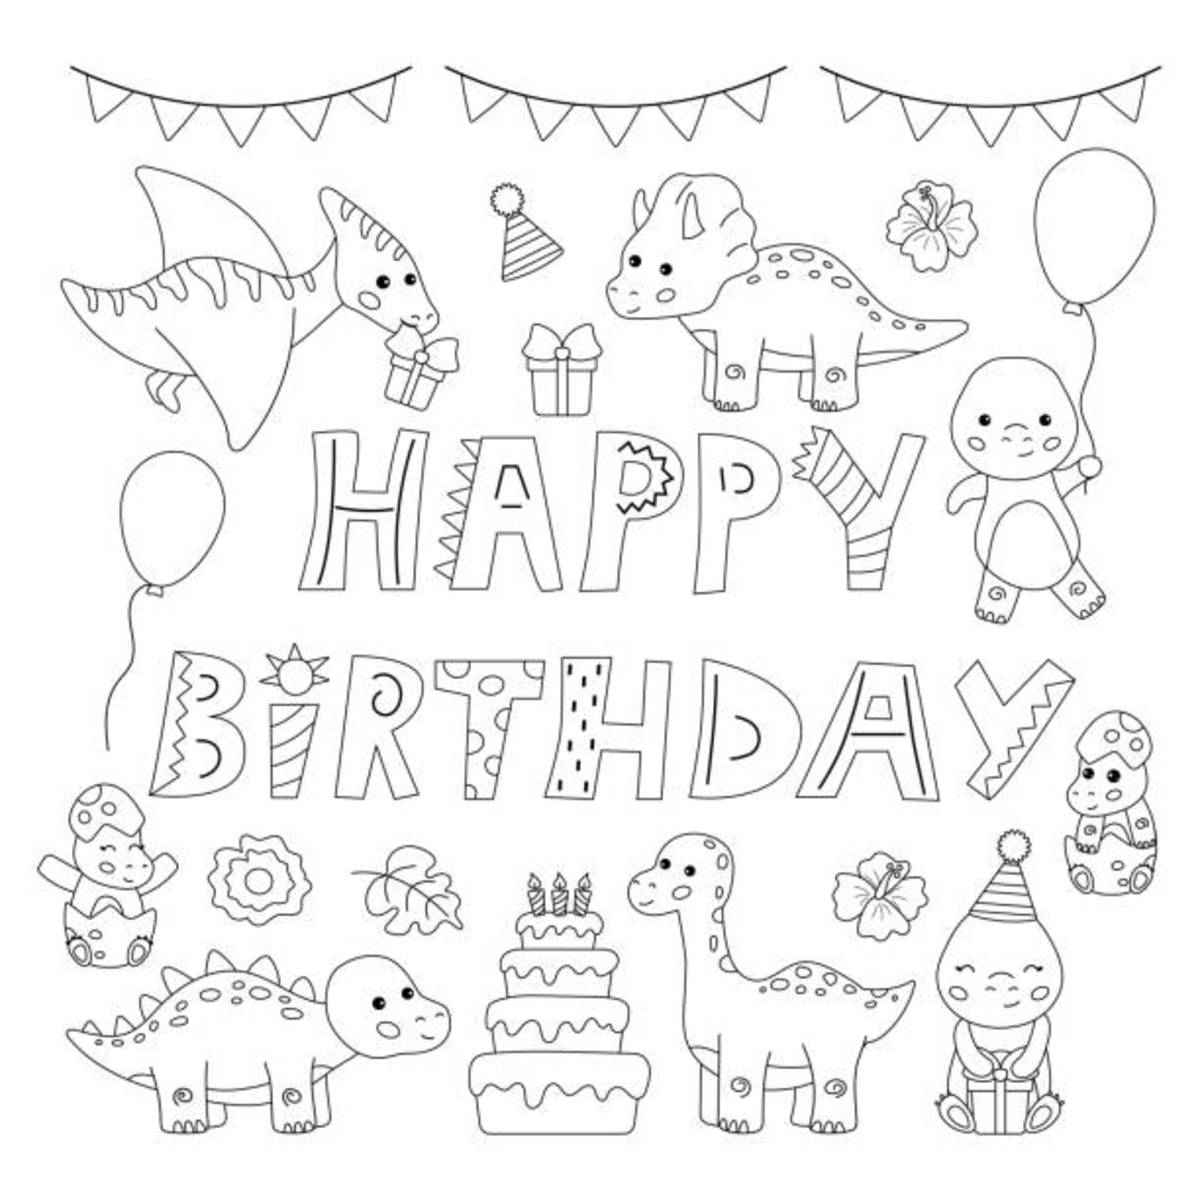 20 Printable Birthday Cards To Color Parade - Free Printable Birthday Cards To Color